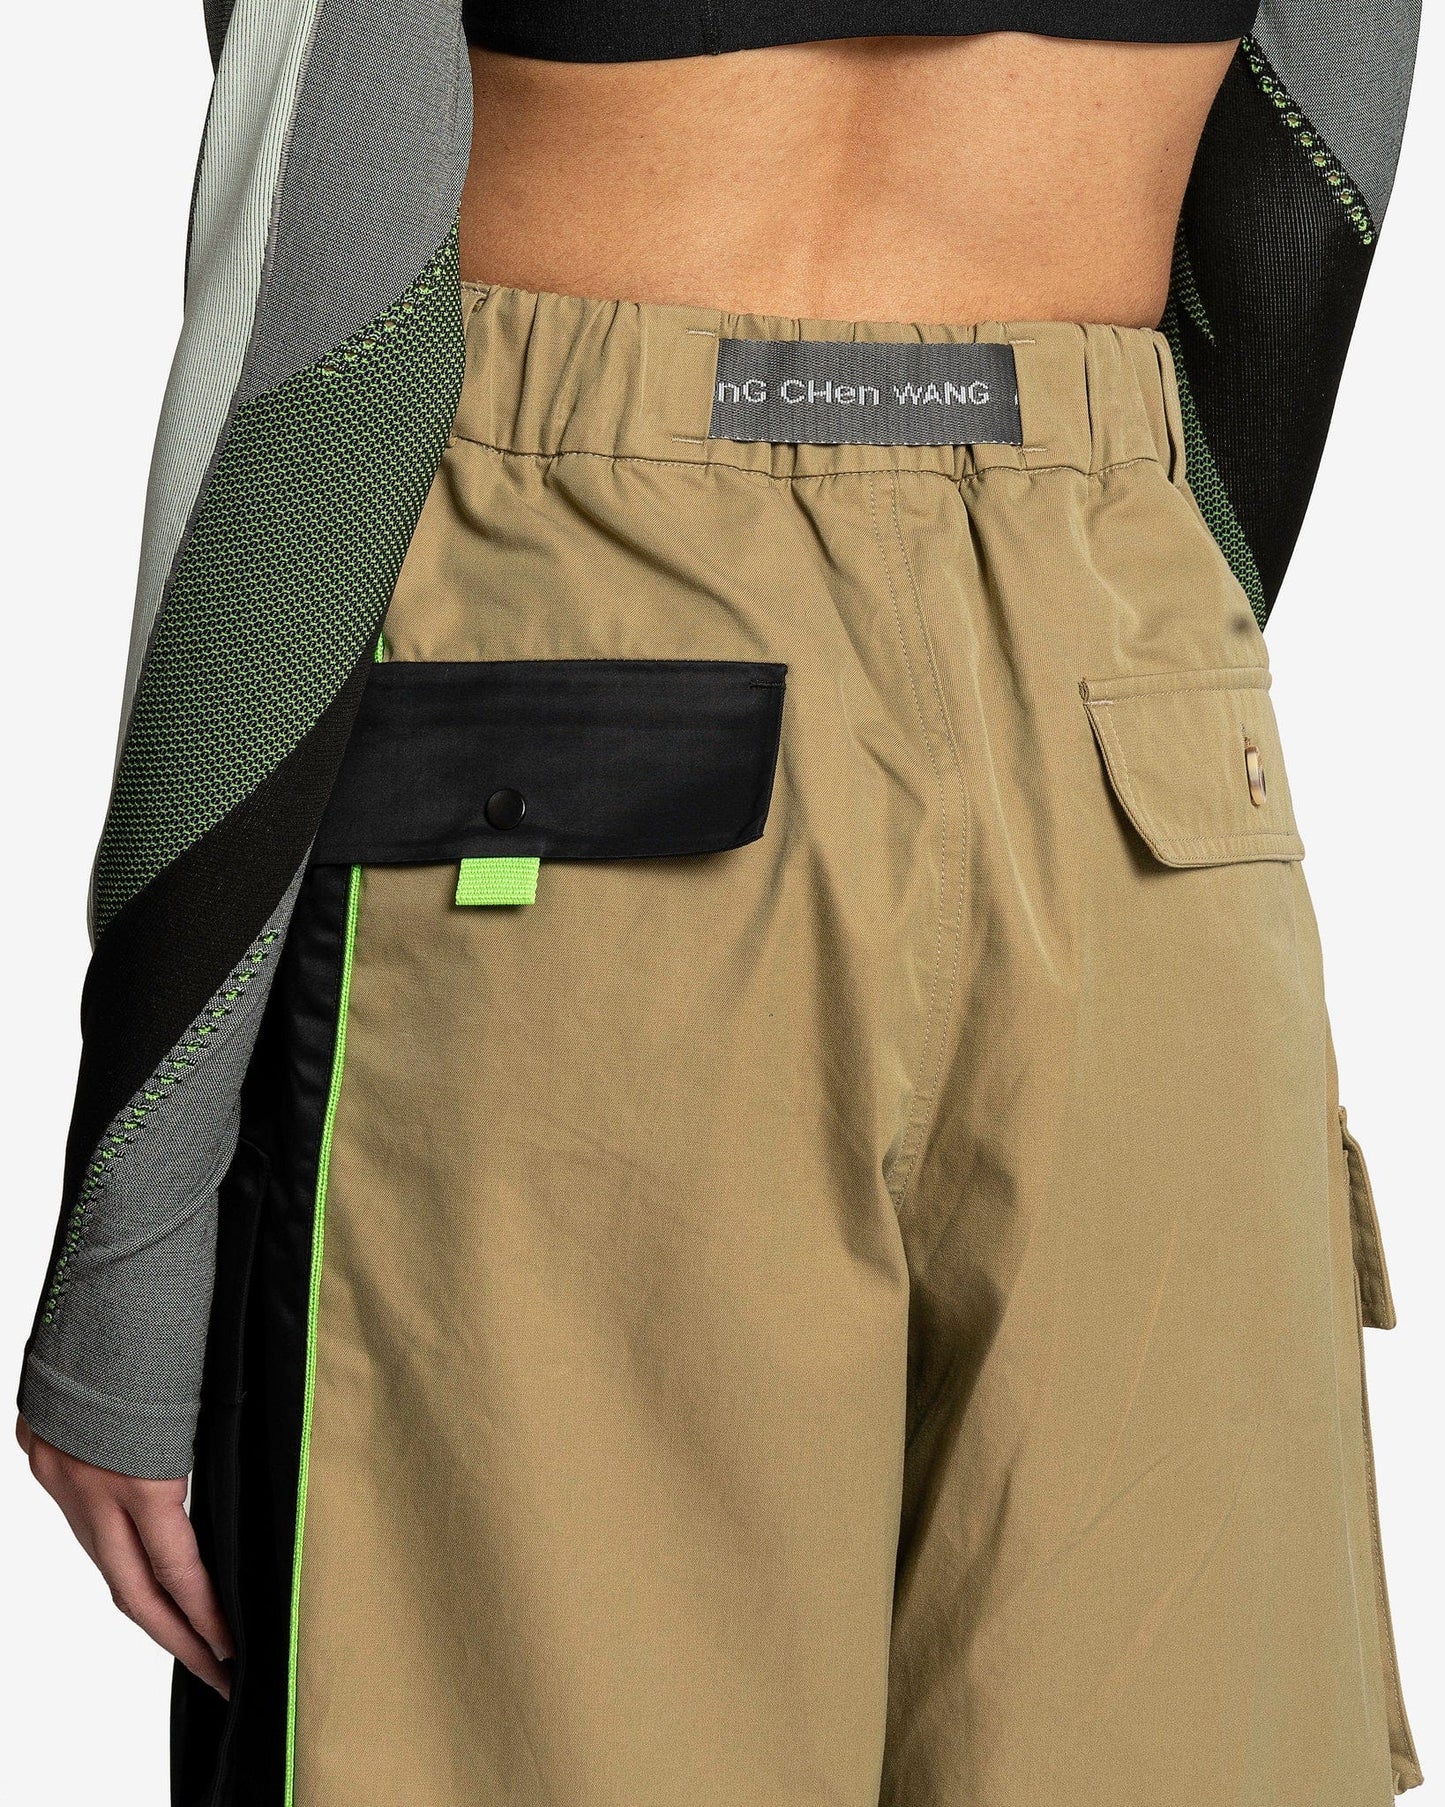 Nike Men's Pants Nike Pro x Feng Chen Wang Cargo Pants in Khaki/Black